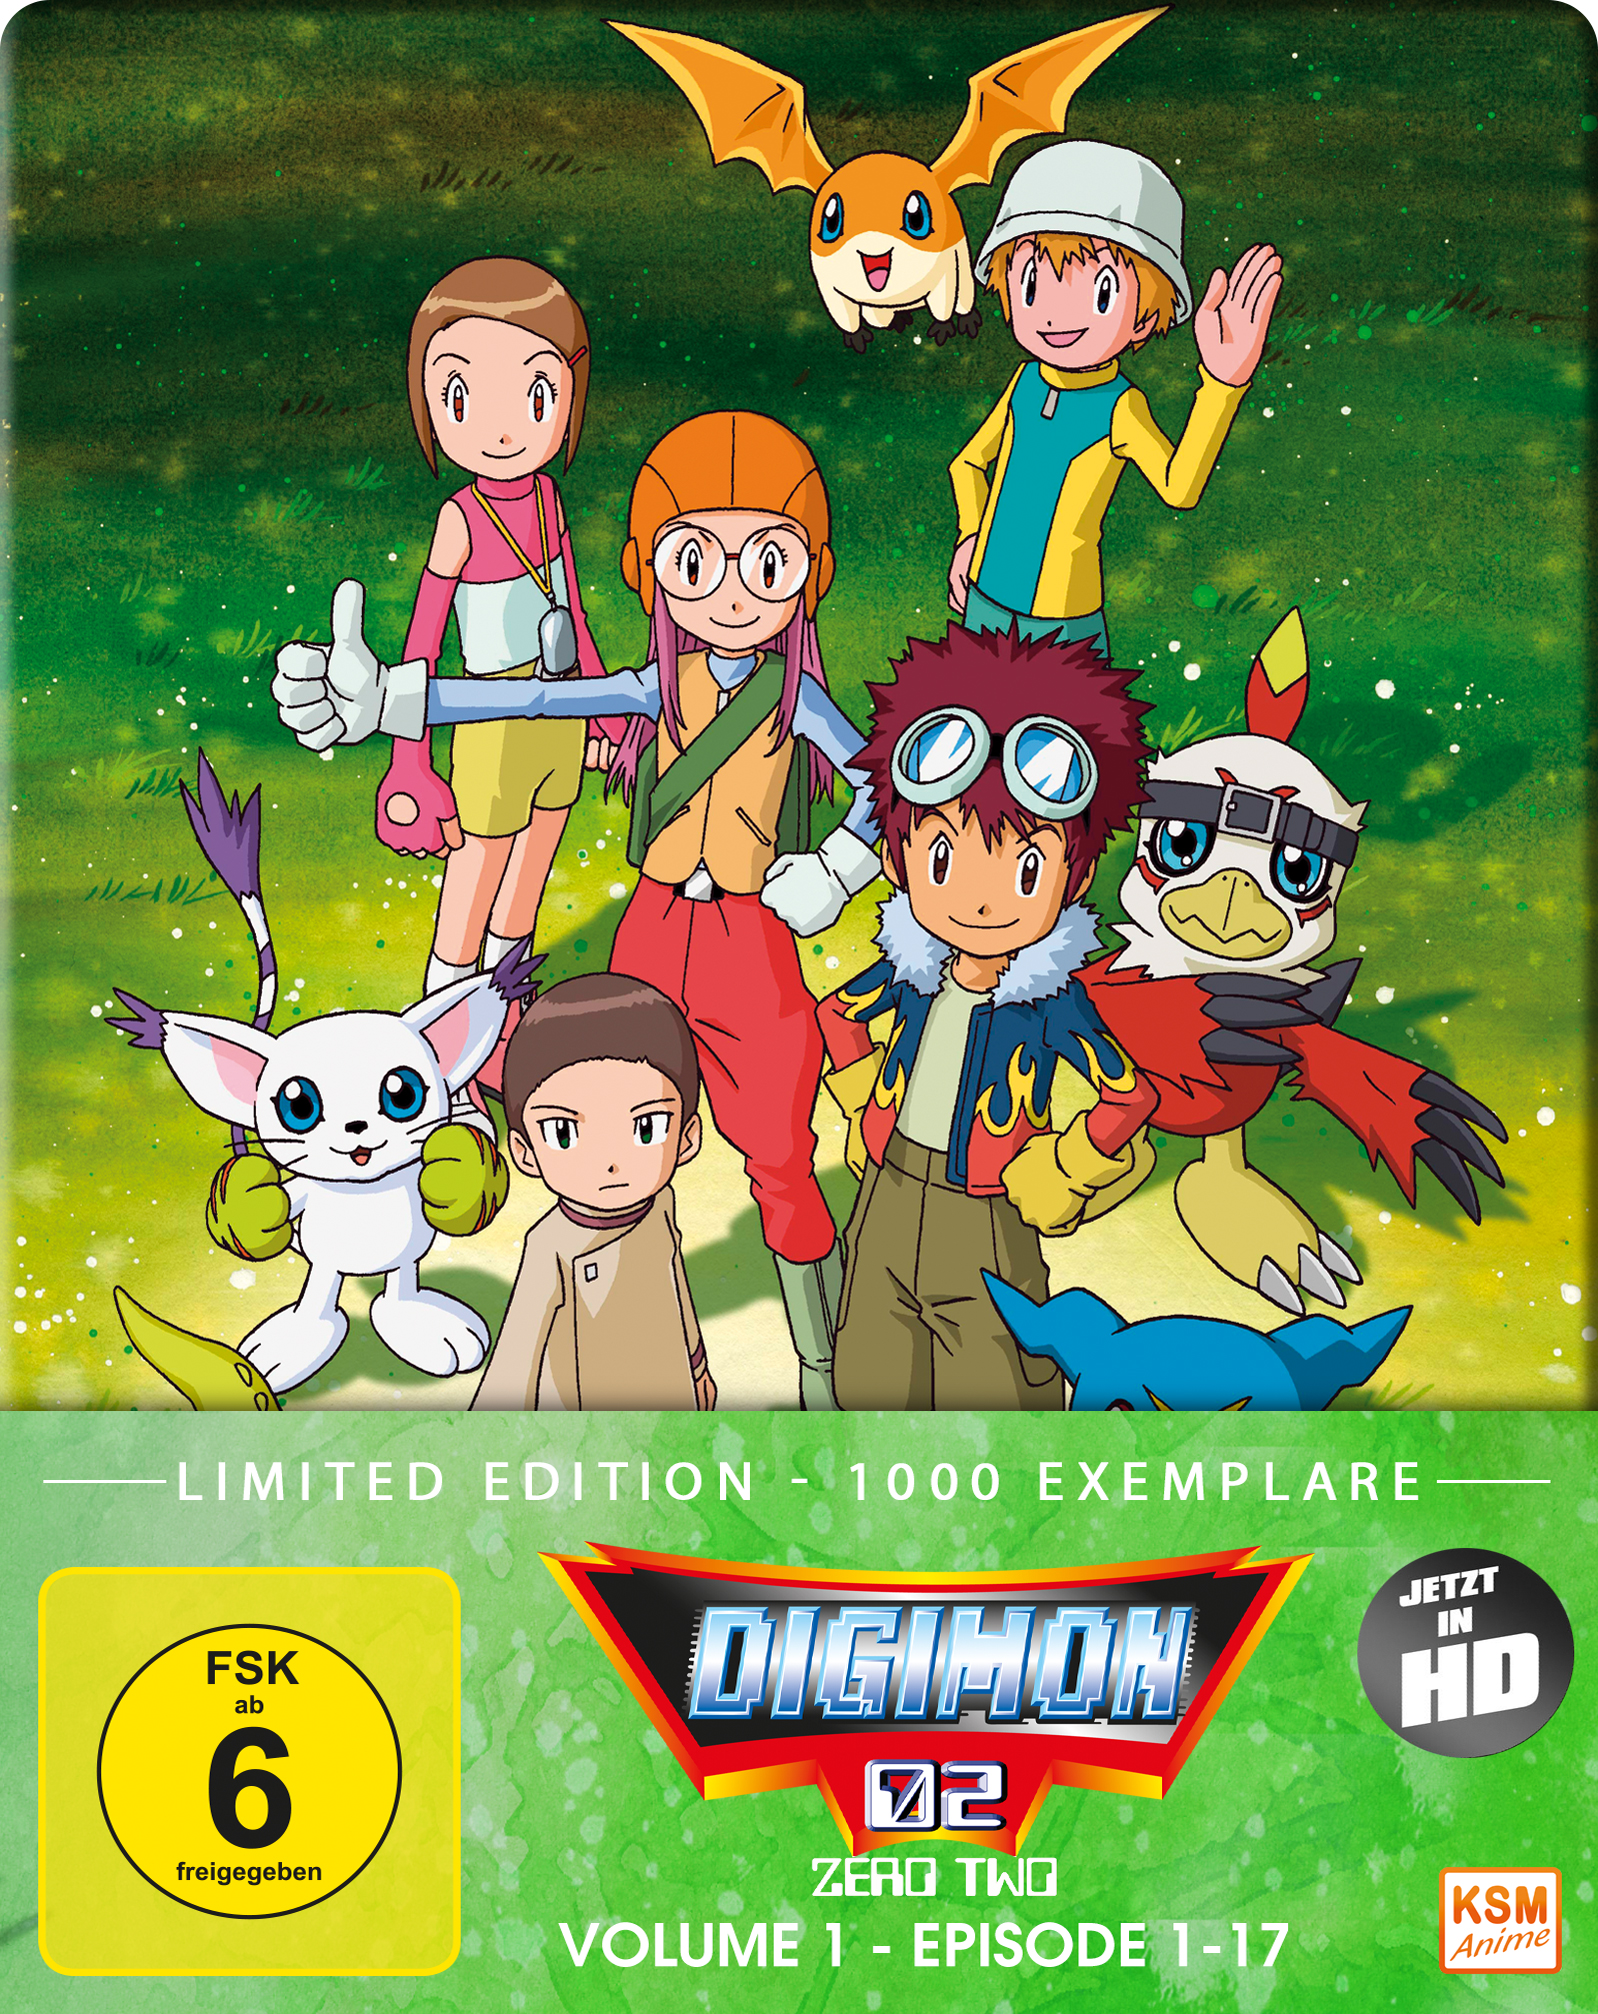 Digimon Adventure 02 - Volume 1 - Limited Edition: Episode 01-17 im FuturePak [Blu-ray] Cover